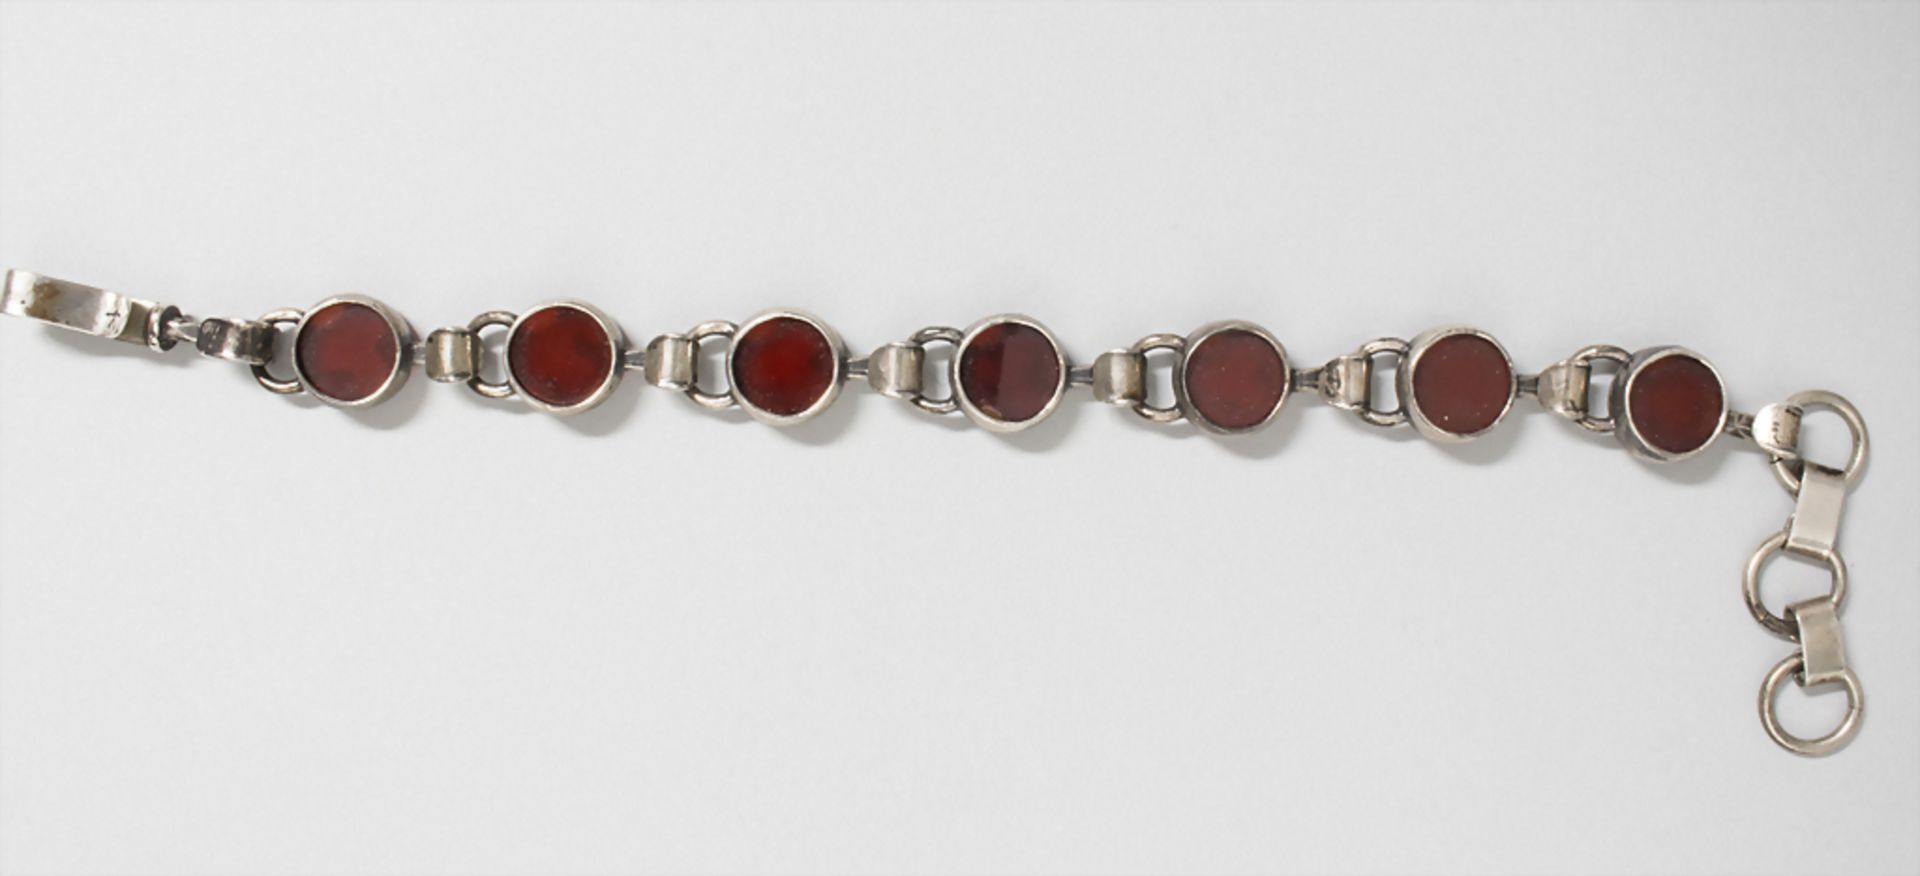 Armband in Silber / A silver bracelet, um 1970 - Image 2 of 3